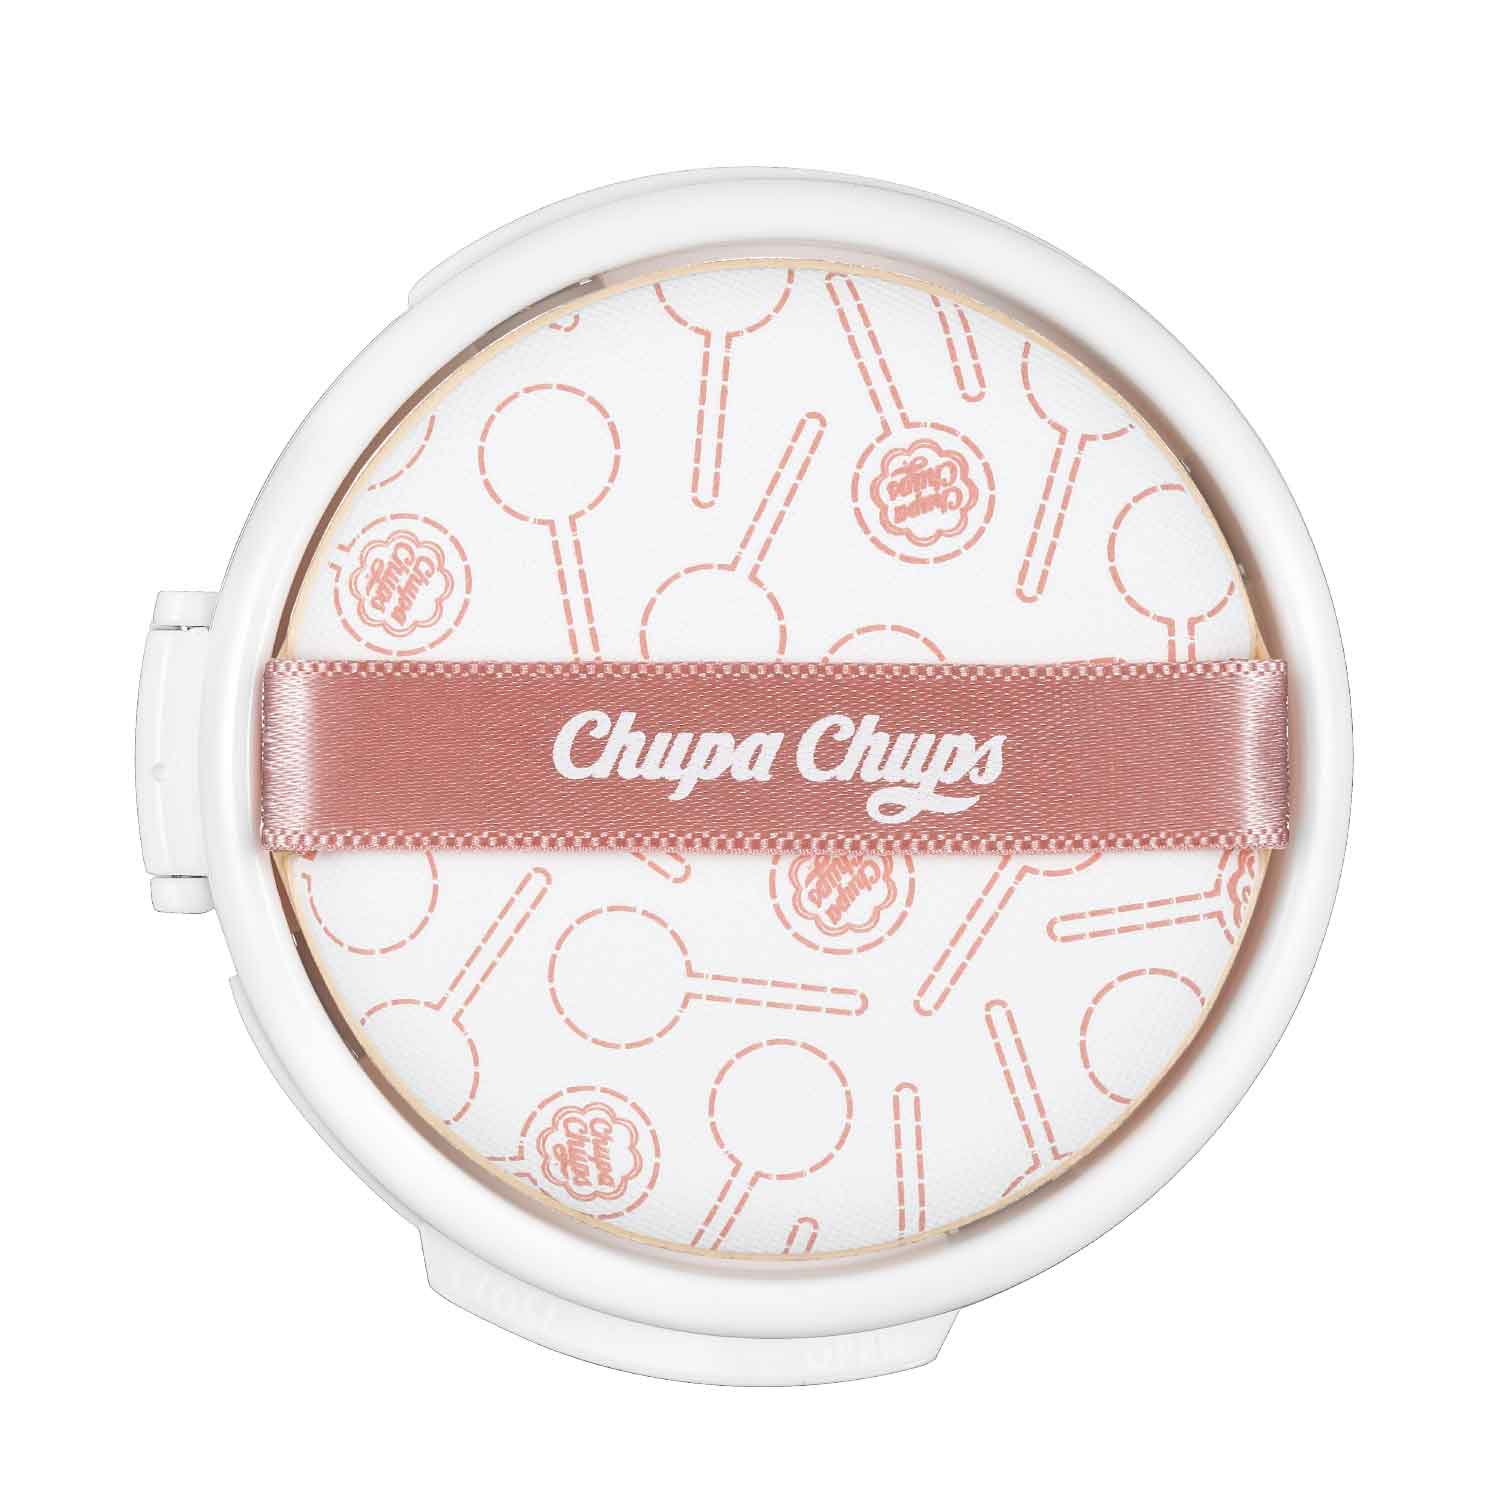 Chupa Chups Candy Glow Cushion SPF 50+ PA++++ Fair Refill 14g - интернет-магазин профессиональной косметики Spadream, изображение 40668